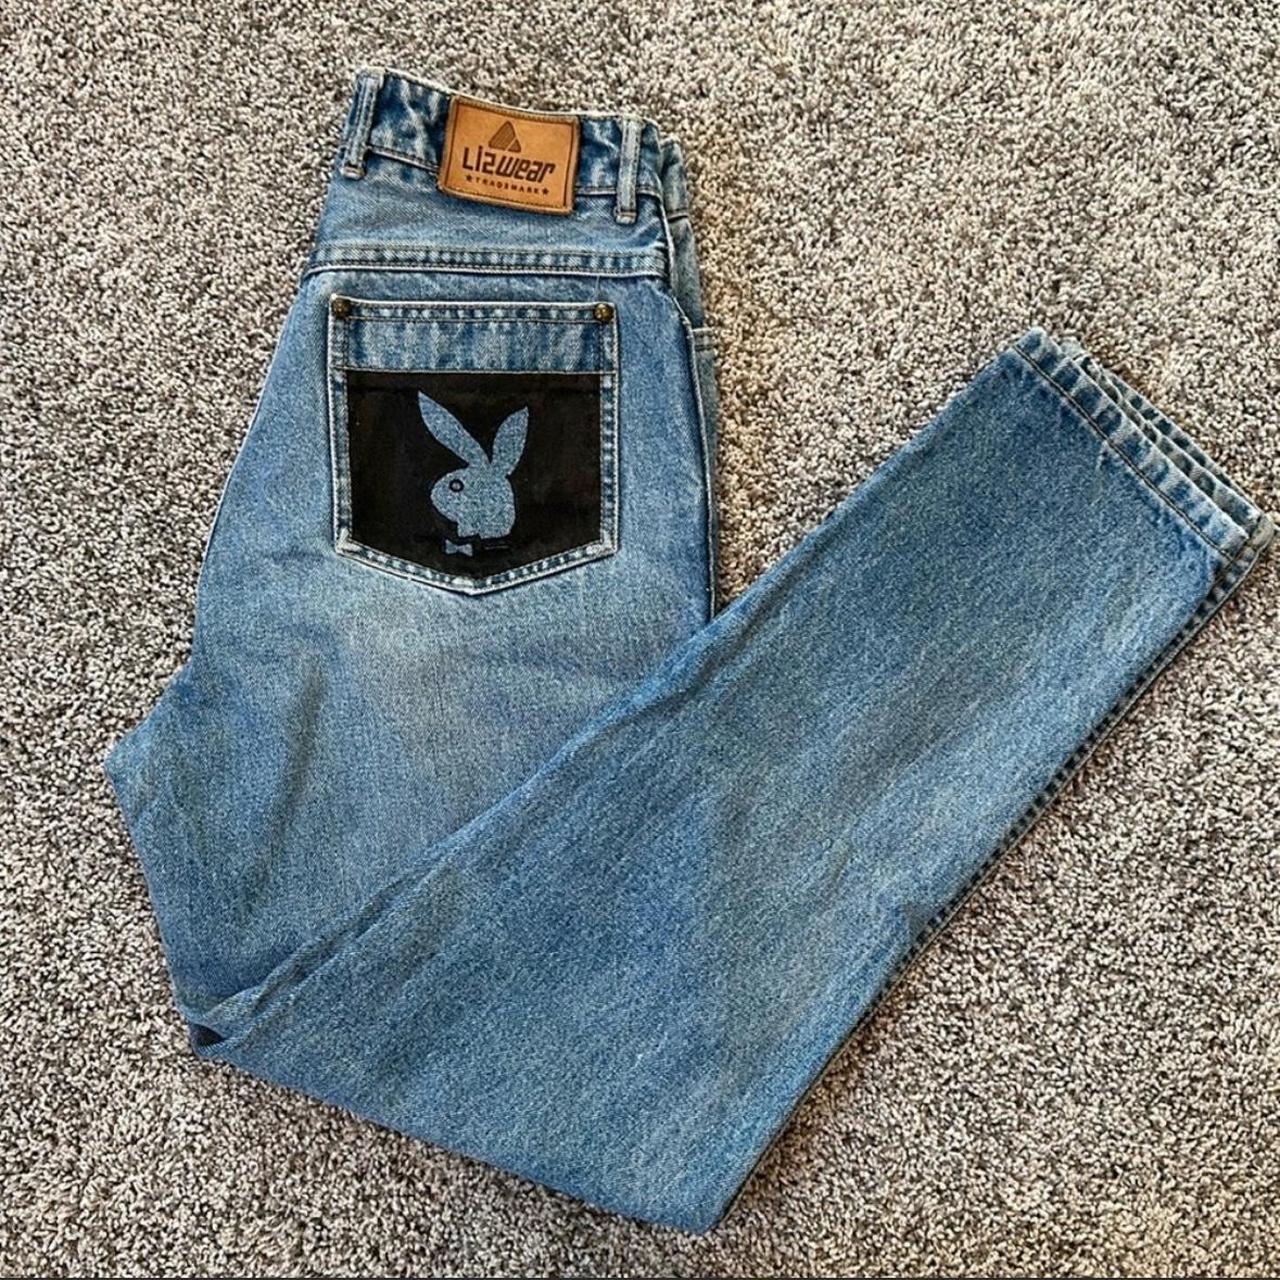 Vintage Lizwear Playboy bunny pocket mom jeans 🦋ALL... - Depop